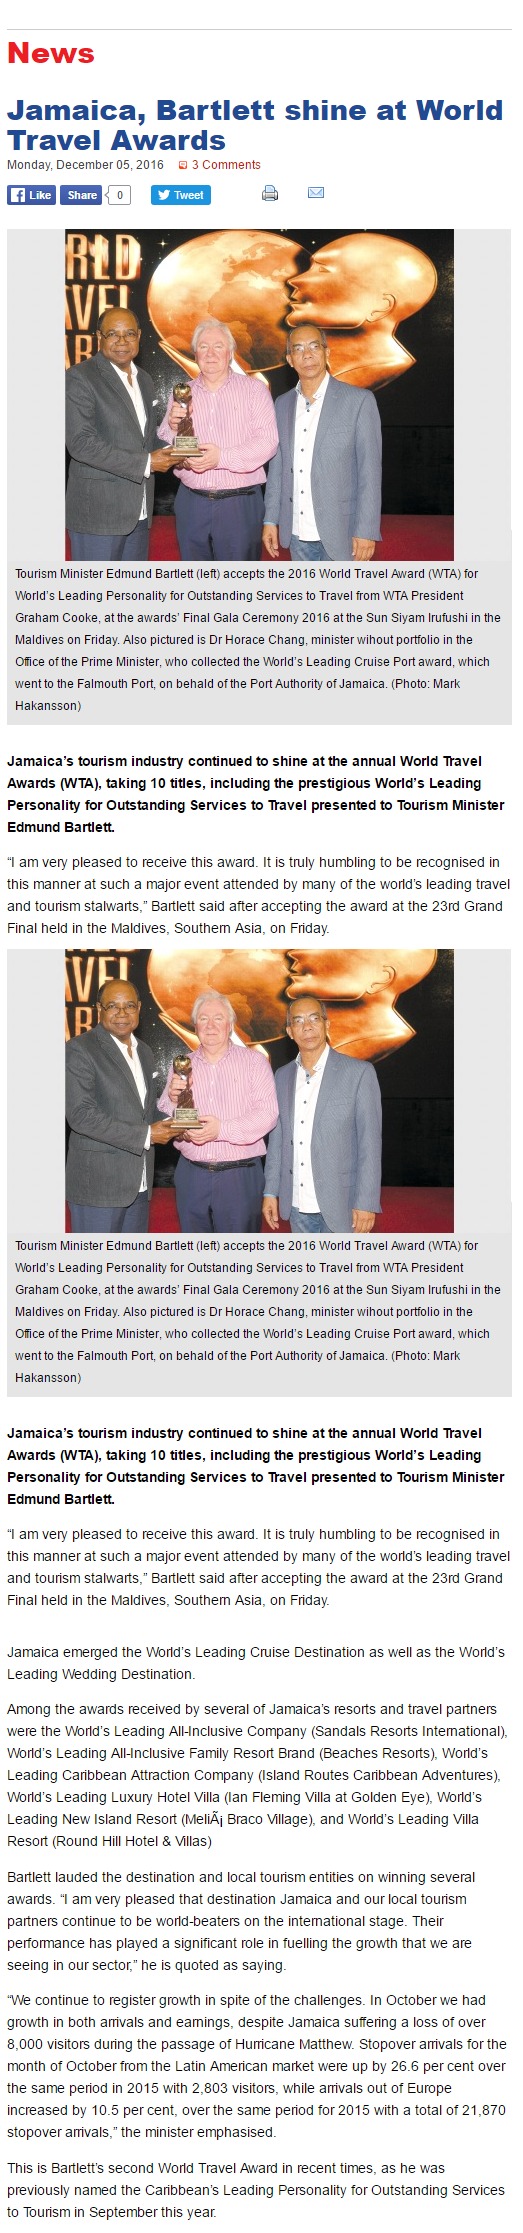 Jamaica, Bartlett shine at World Travel Awards